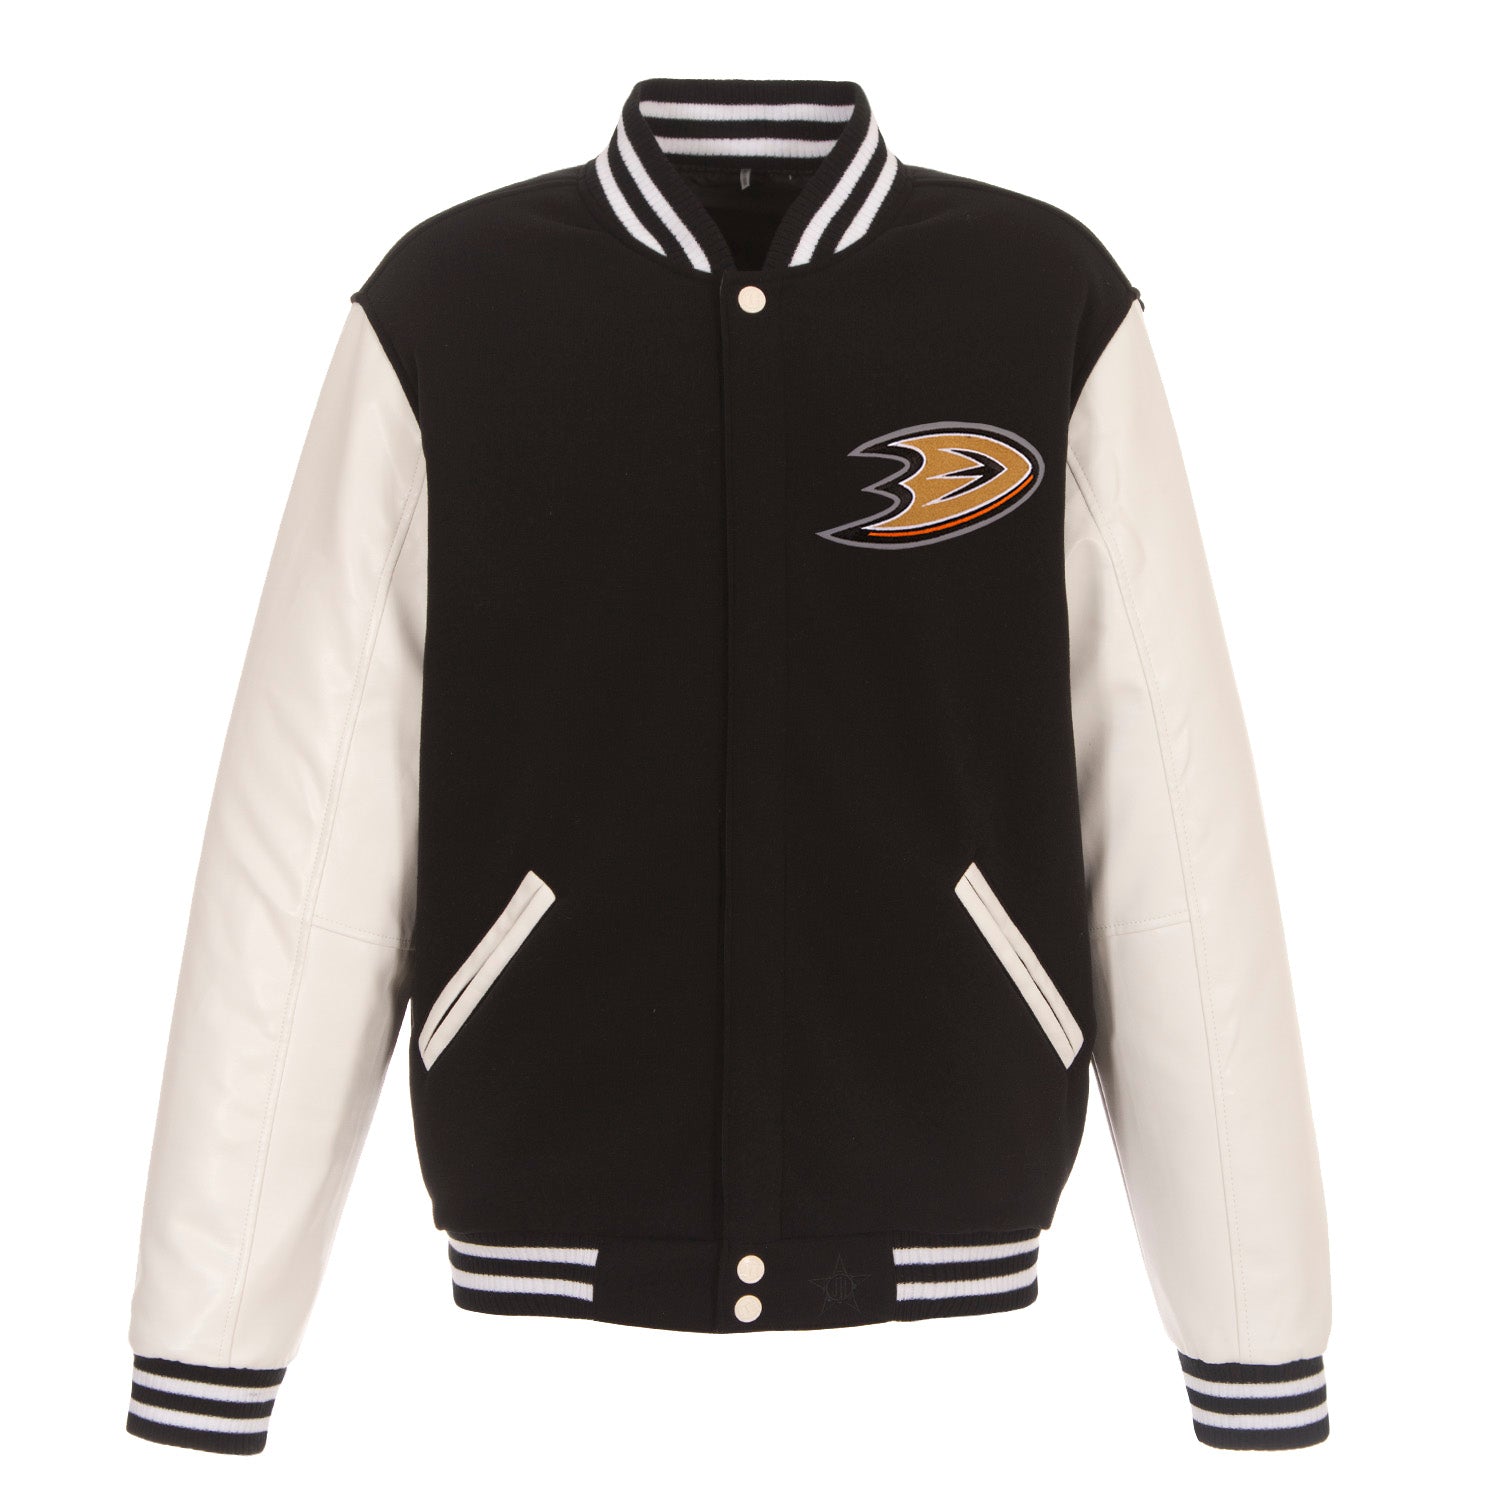 Wool/Leather Anaheim Ducks Varsity Black and White Jacket